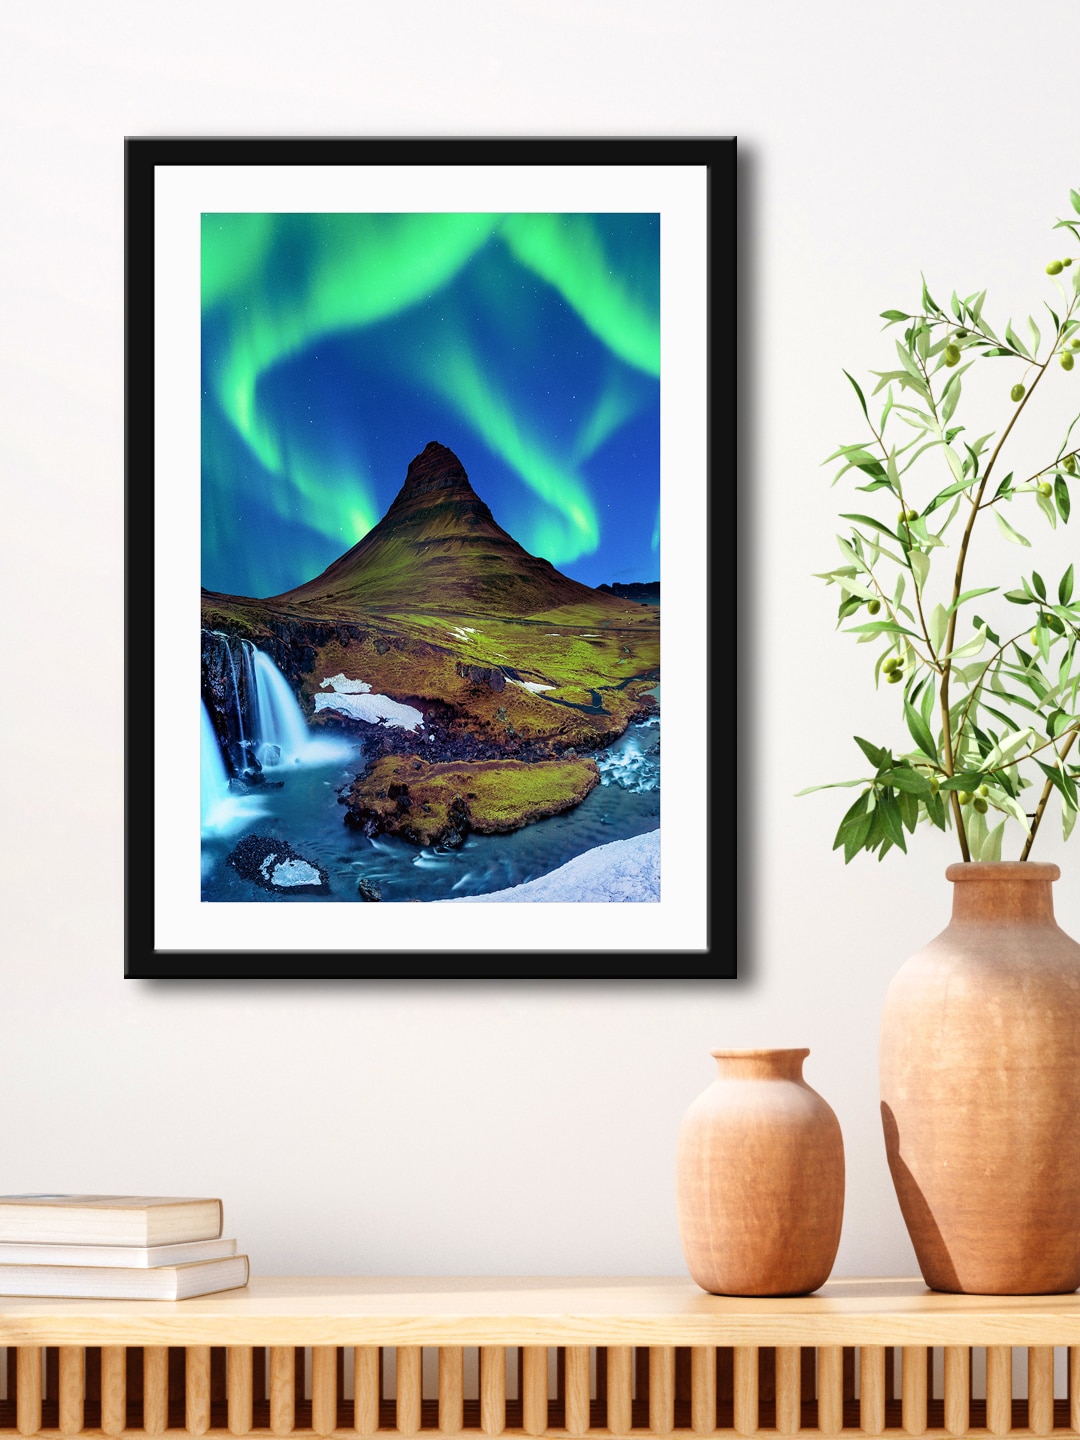 999Store Blue   Green Aurora Mountain HD Printed Framed Wall Art